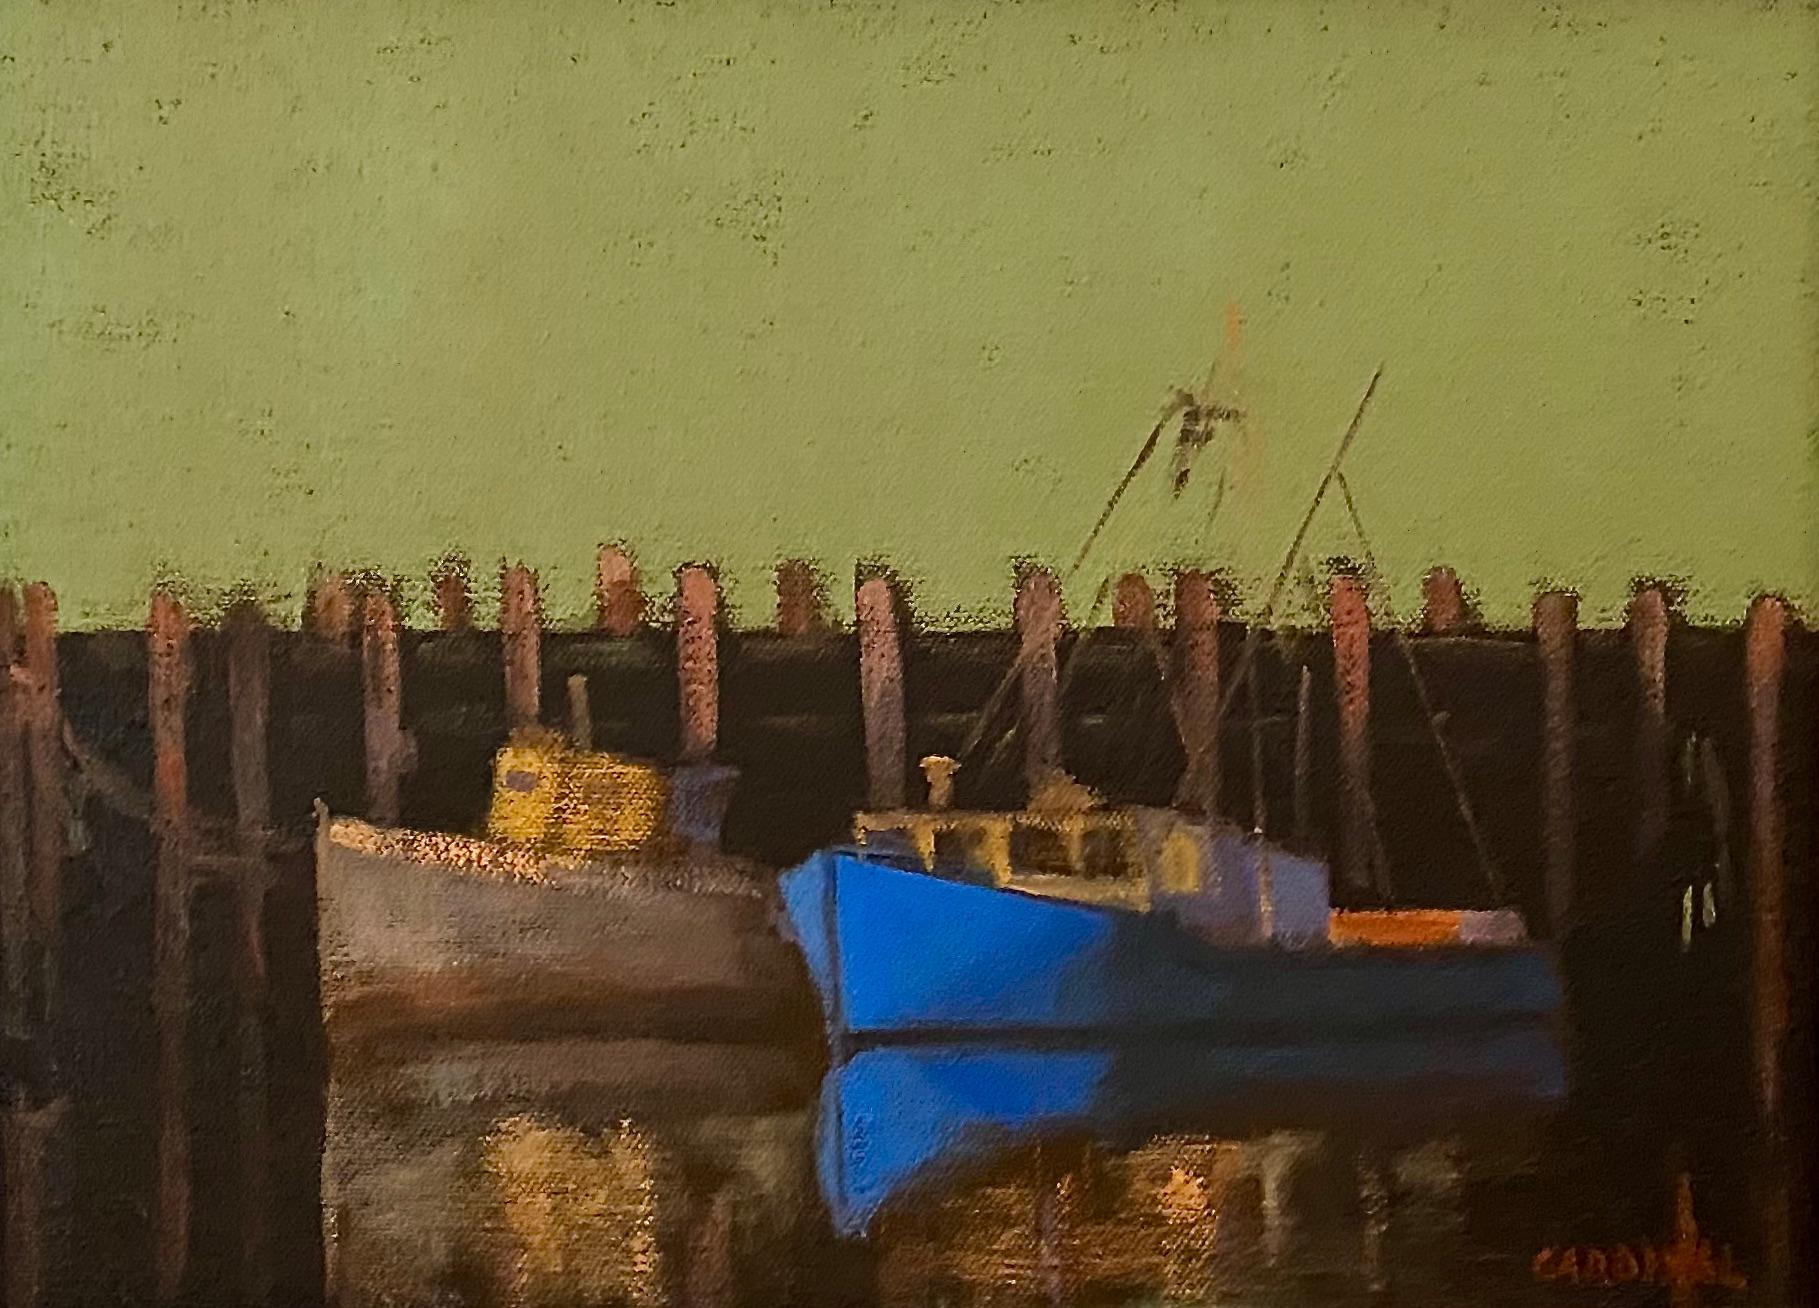 Robert Cardinal Landscape Painting - Wellfleet Harbor